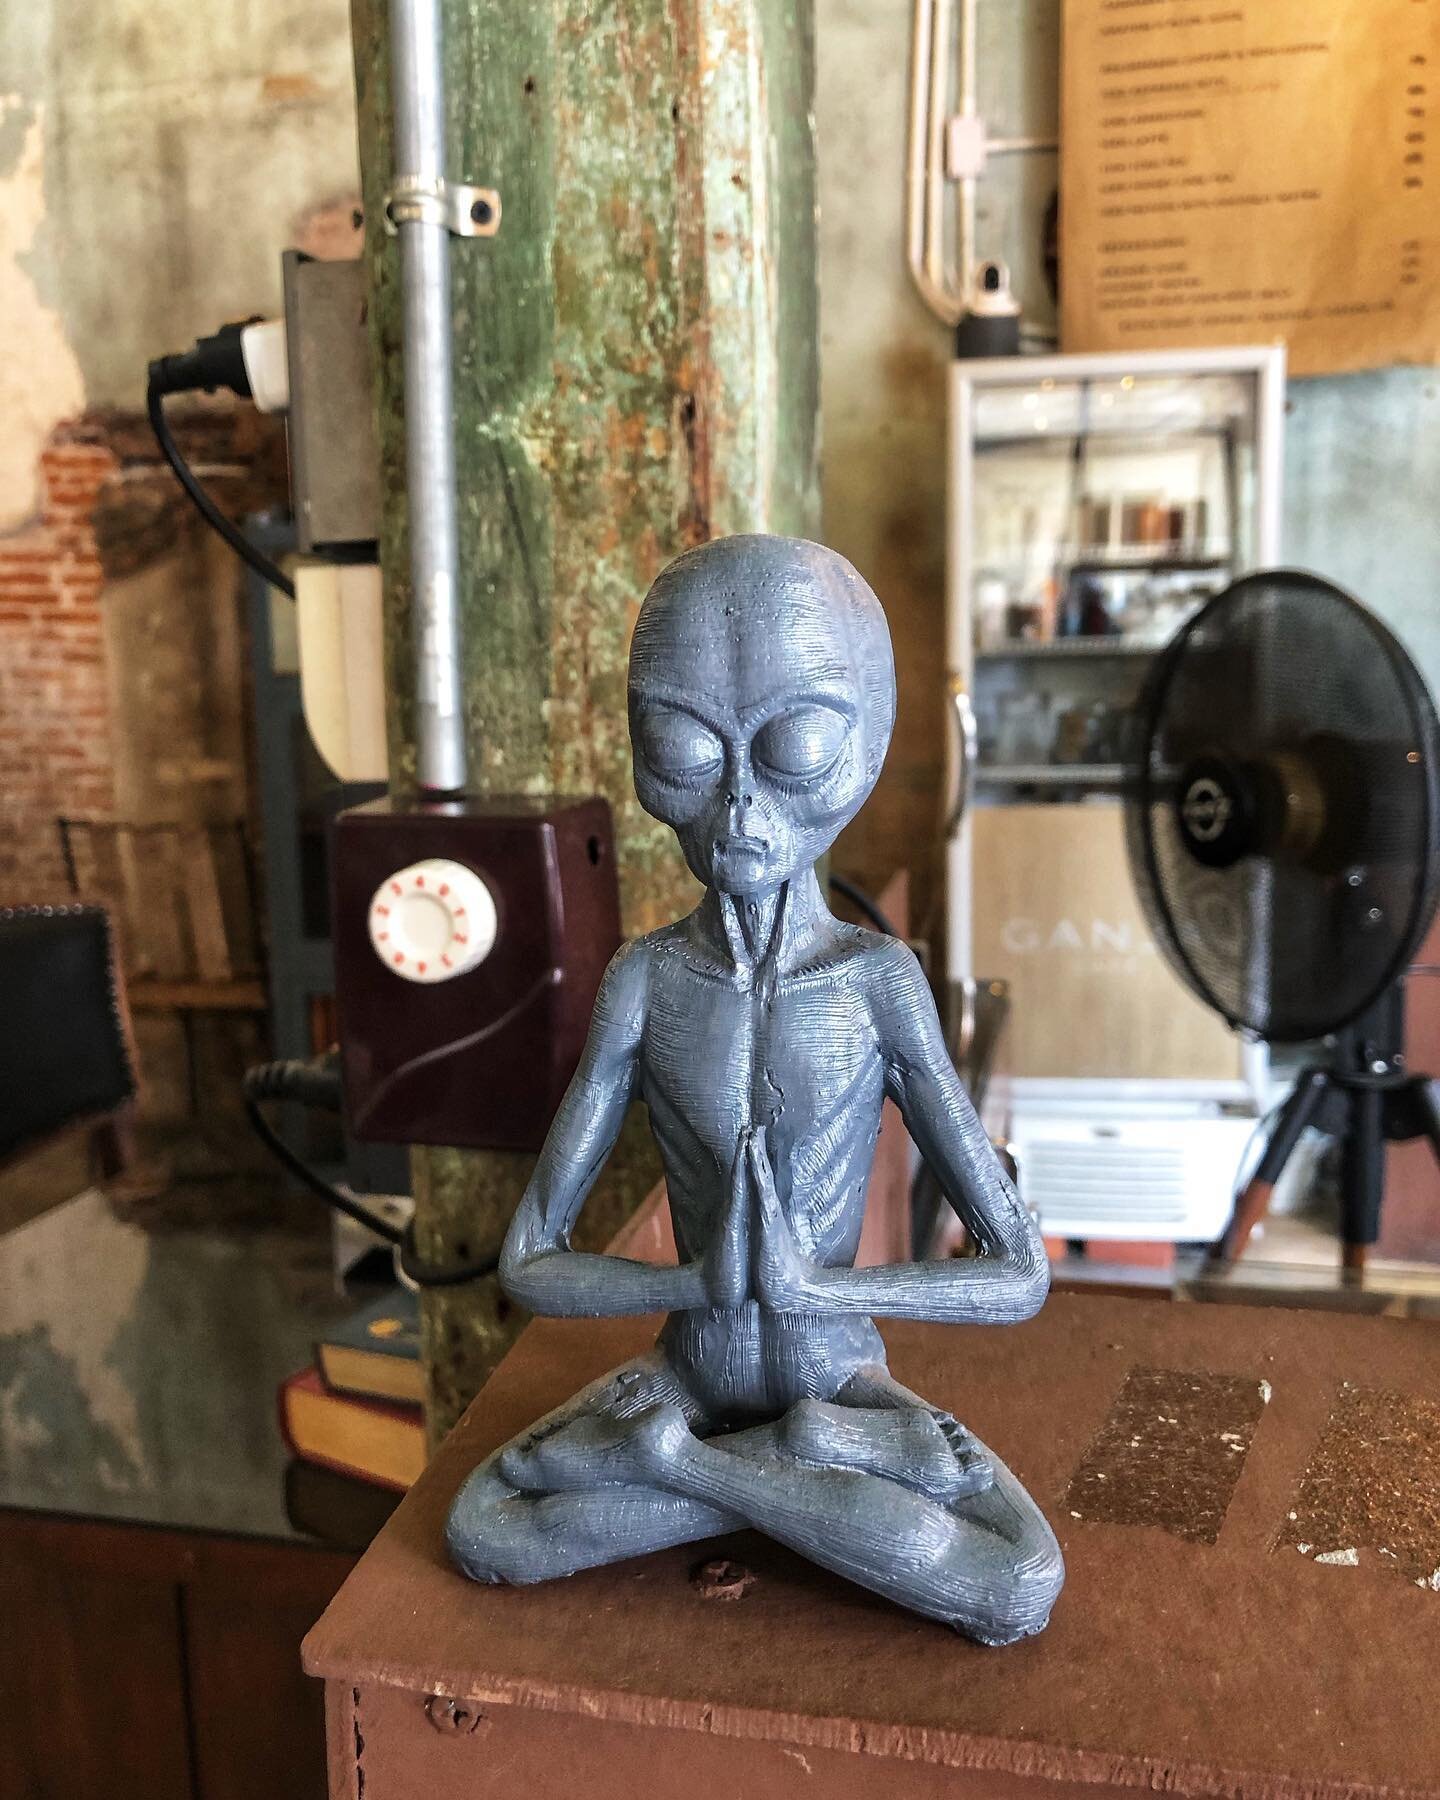 In case you wondered- aliens meditate, too 👽🛸
#donthatemeditate #alien #meditation #yoga #bangkok #thailand